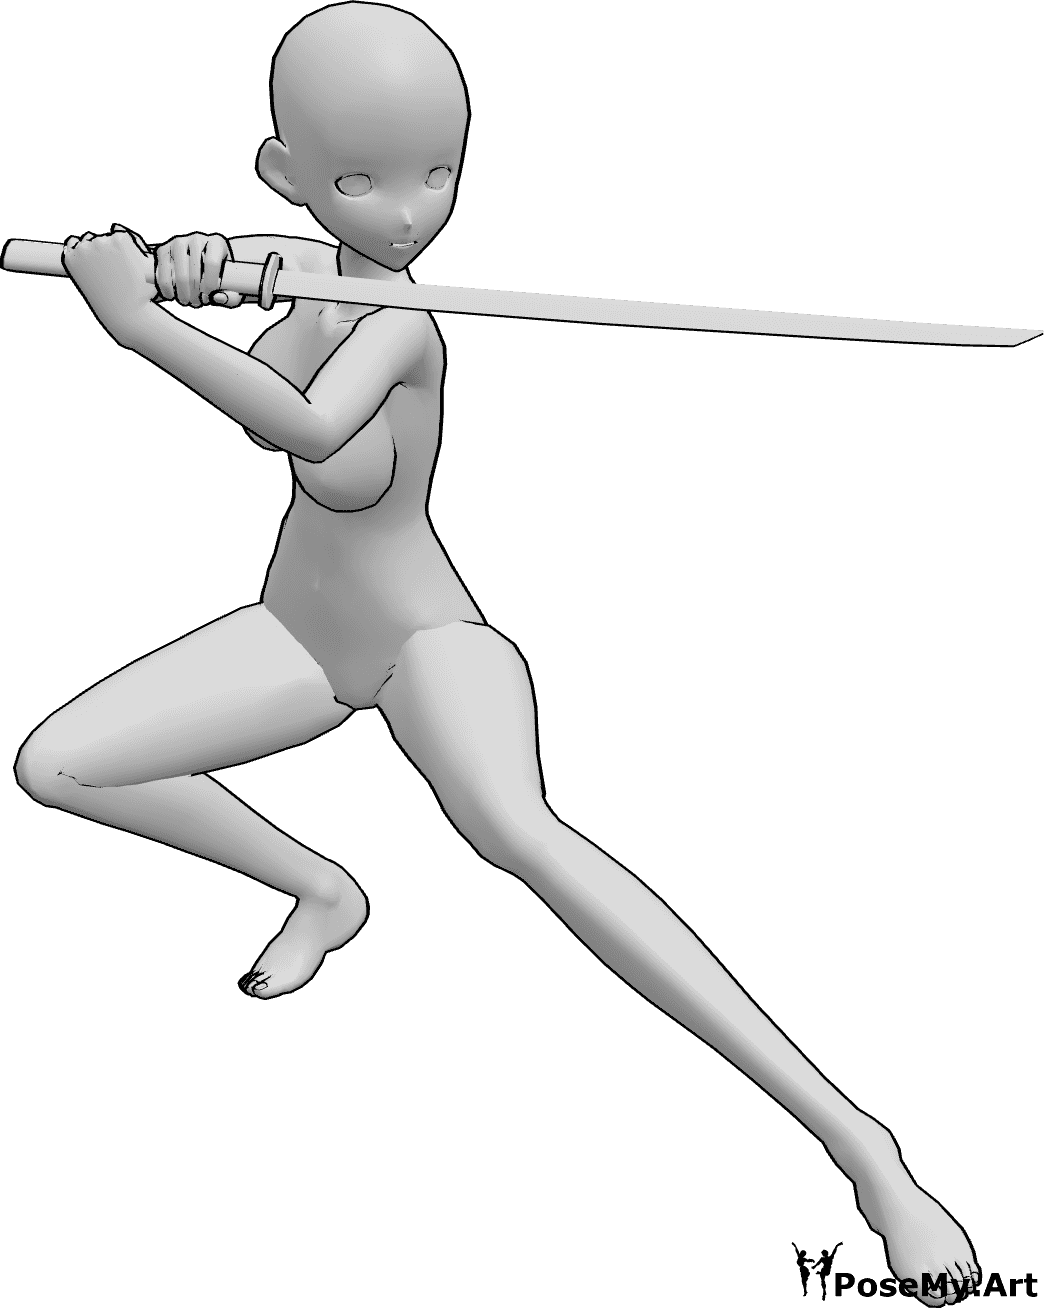 Referencia de poses- Anime femenino ninja pose - Mujer anime sostiene la katana con ambas manos, mirando a la izquierda, lista para luchar.